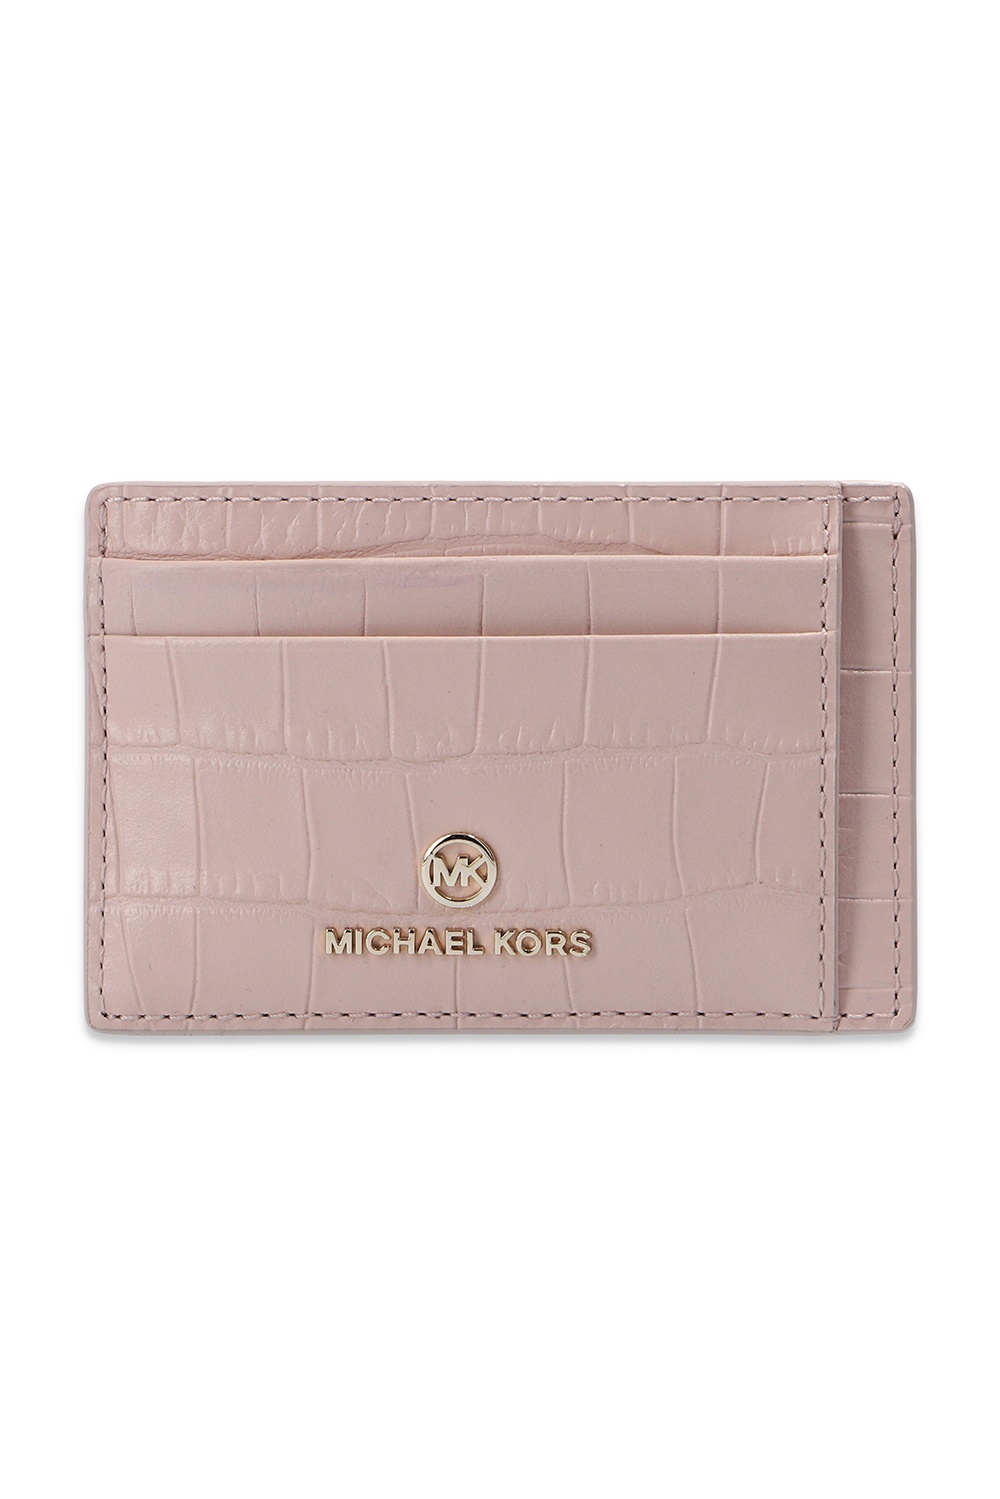 NWT Michael Kors Key Ring Card Holder Pink  Michael kors Clothes  design Fashion design